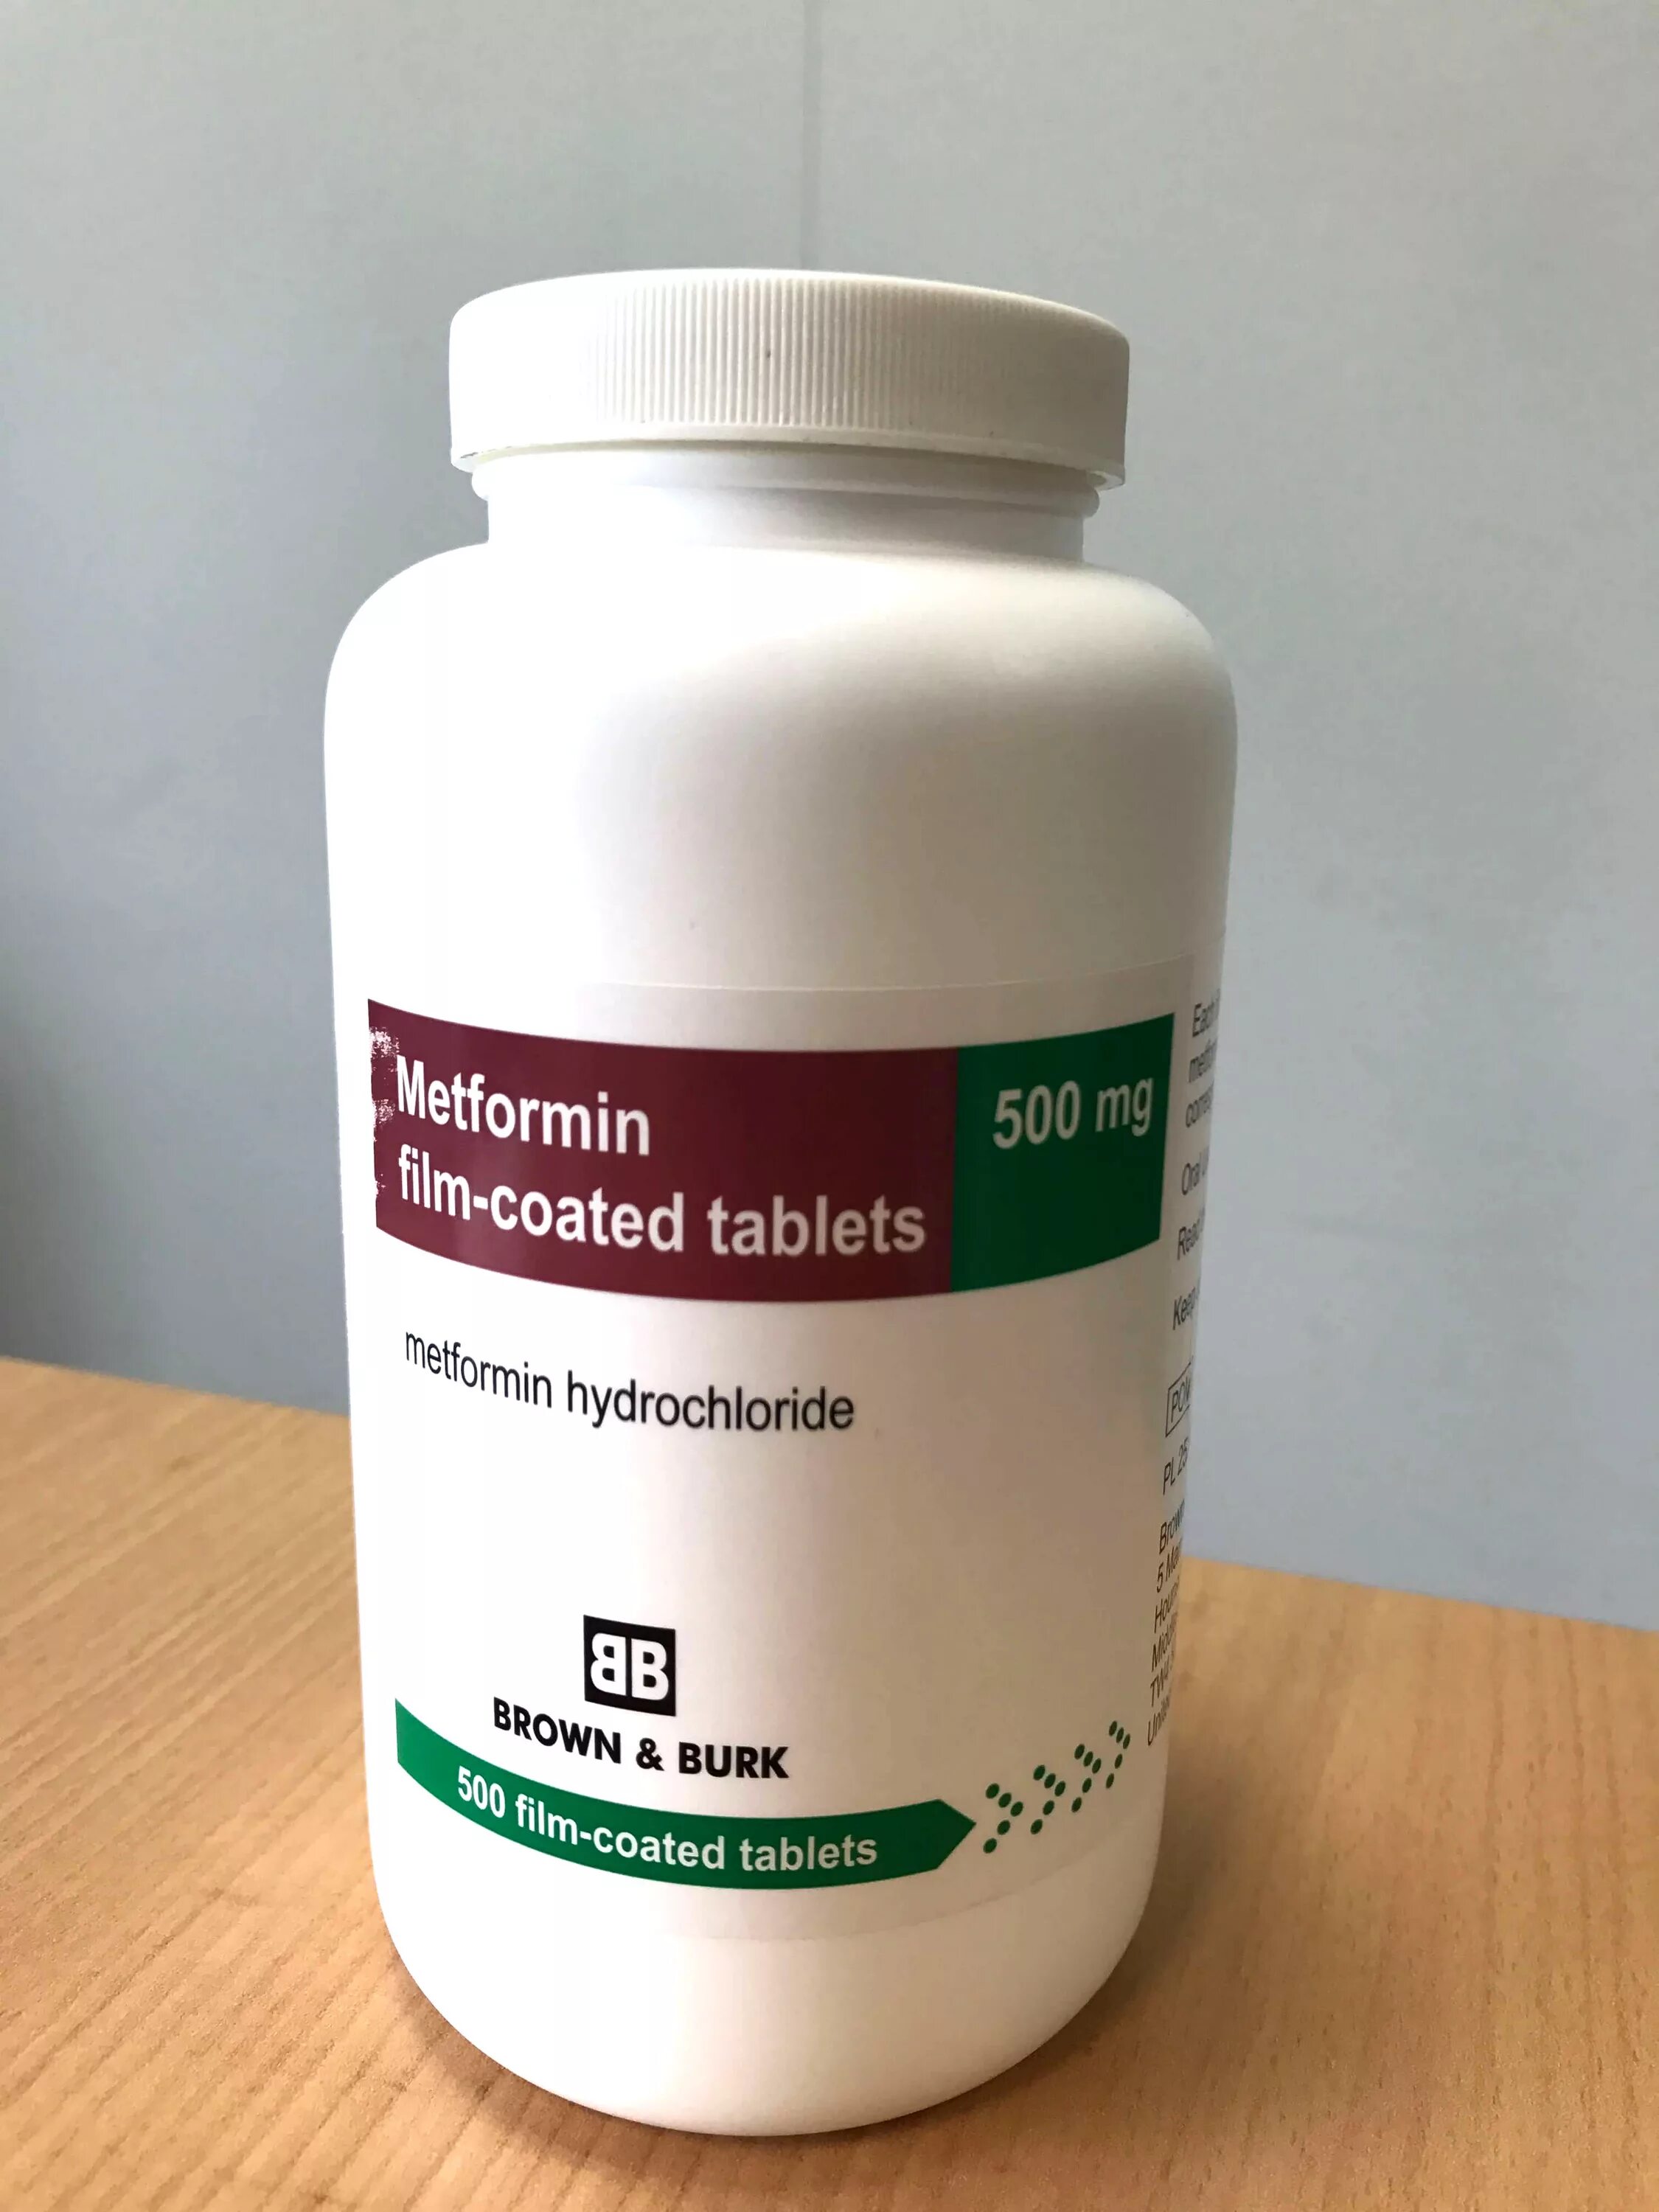 Лучшие производители метформина отзывы. Метформин 500 мг. Метформин 850 мг в баночке. Metformin 500mg таблетки. Метформин в капсулах производитель.